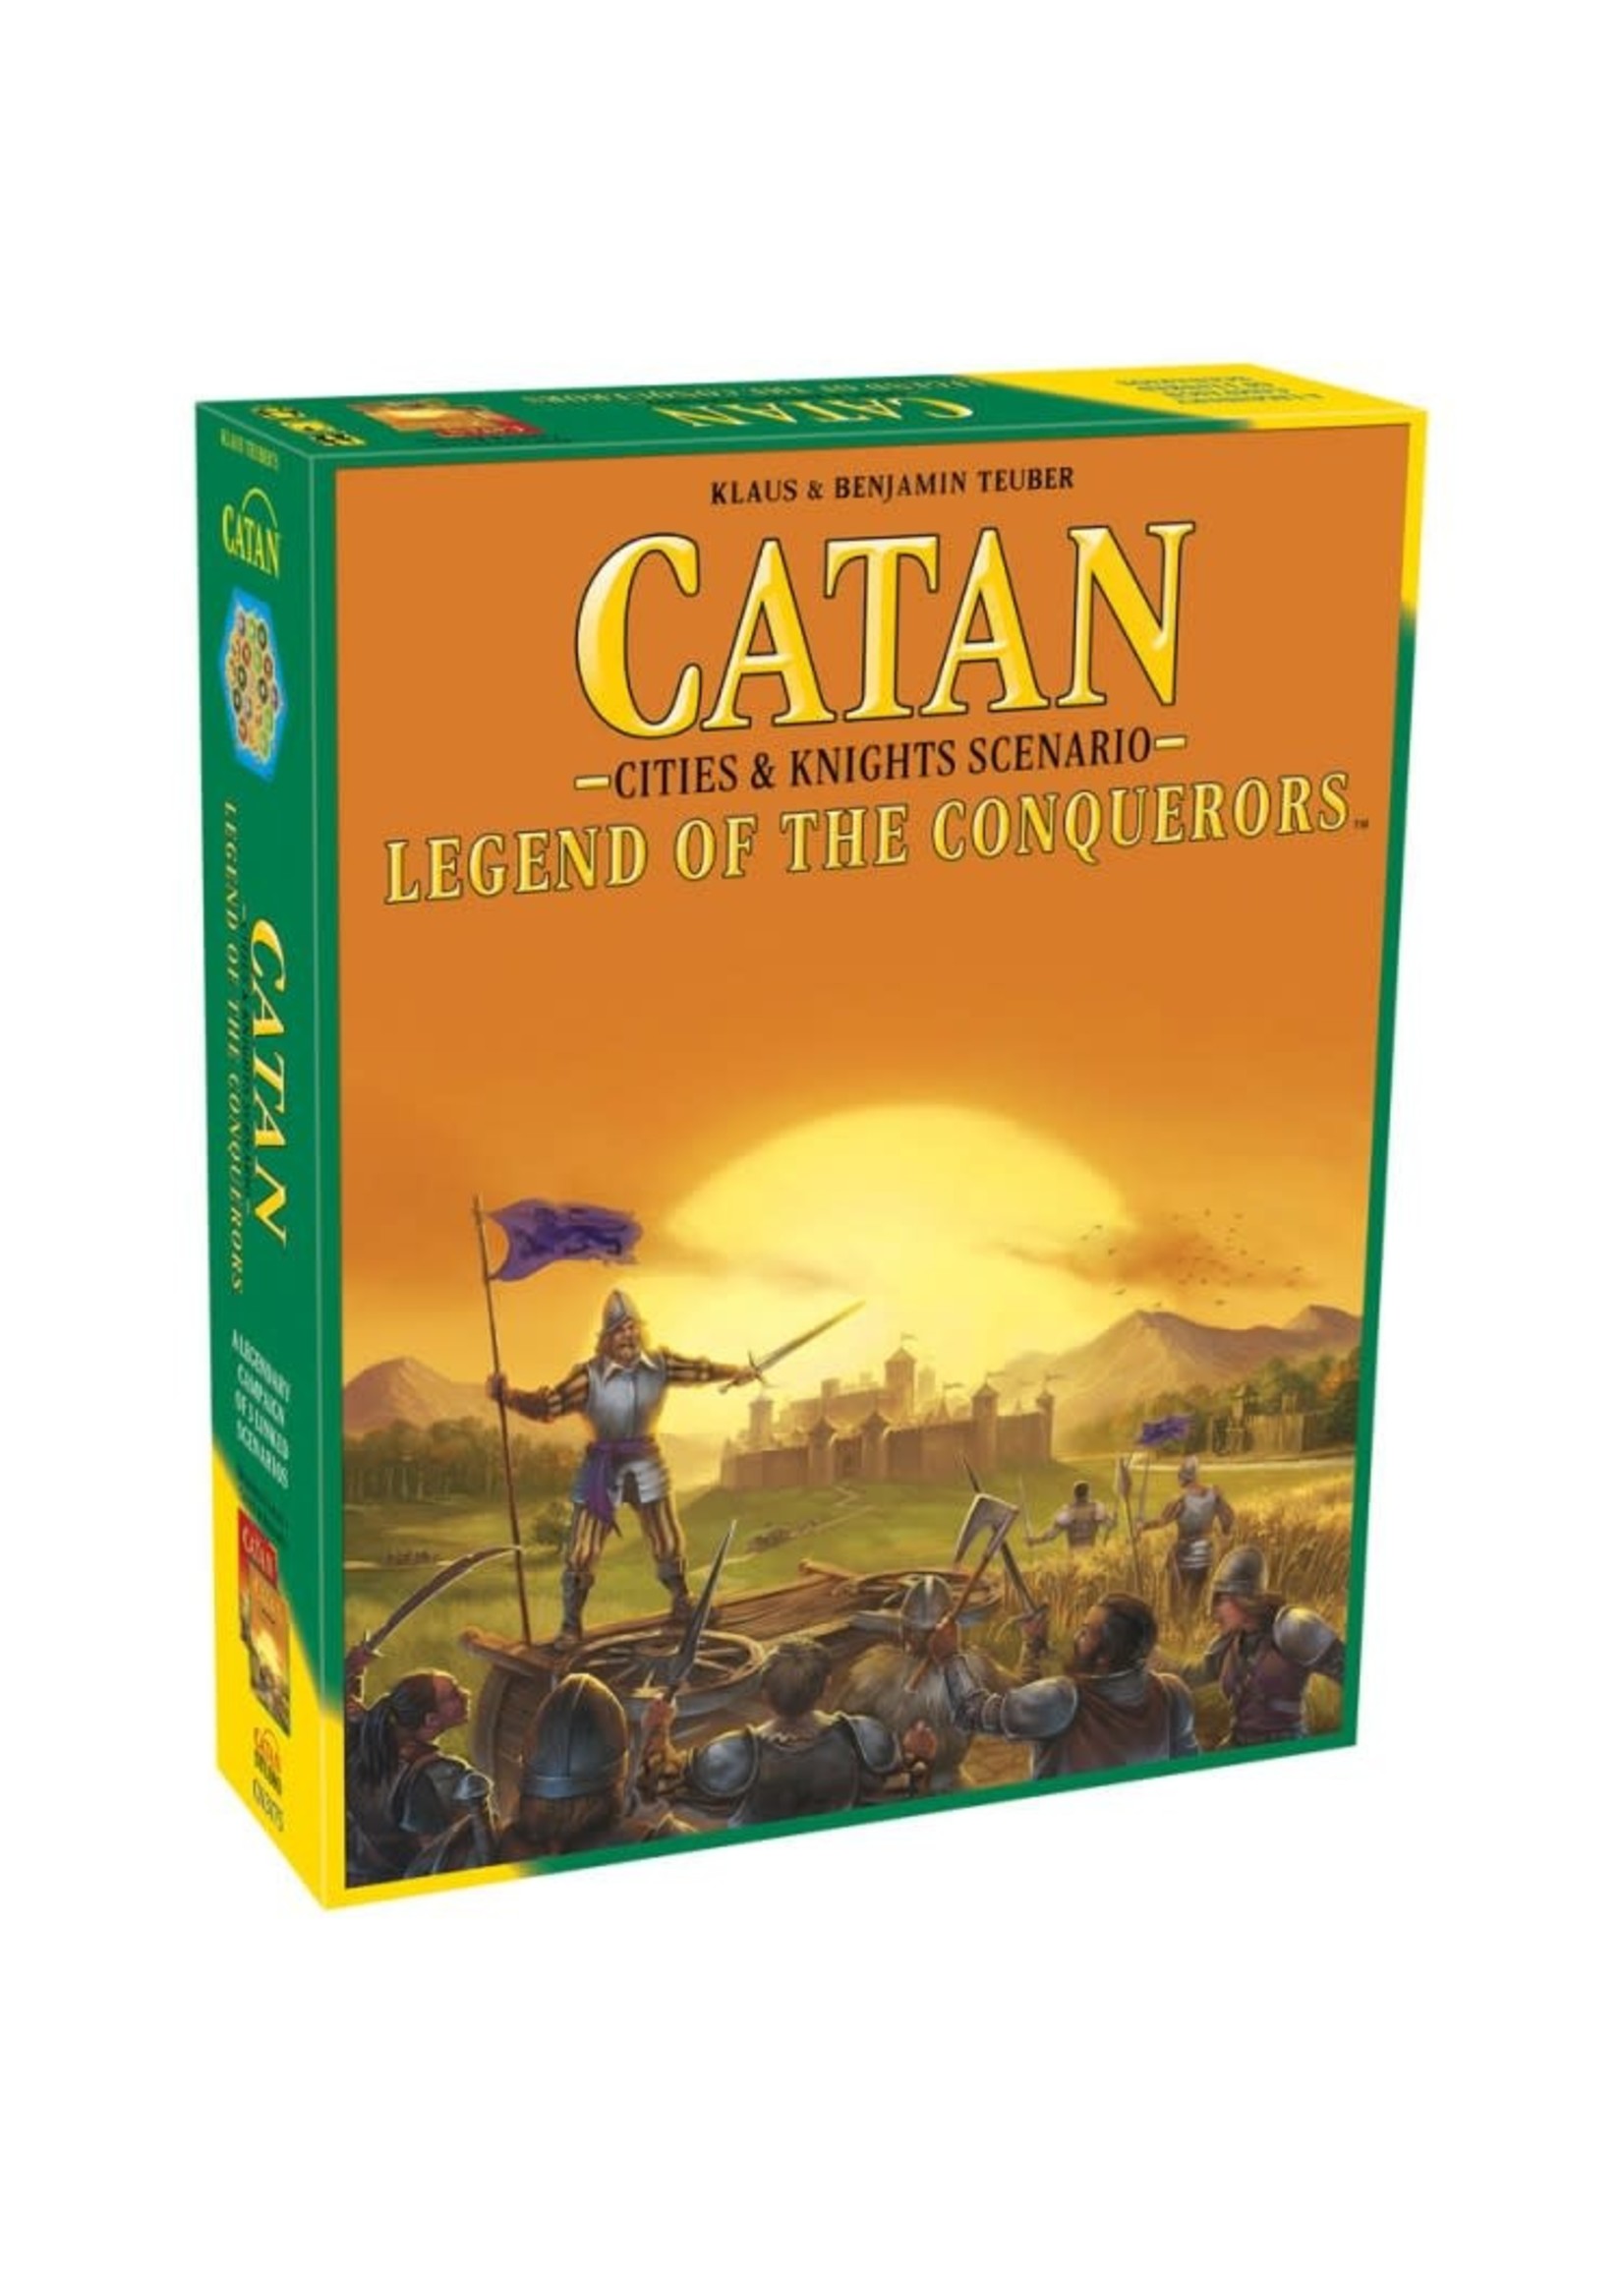 Catan Studio Catan: Legend of the Conquerers